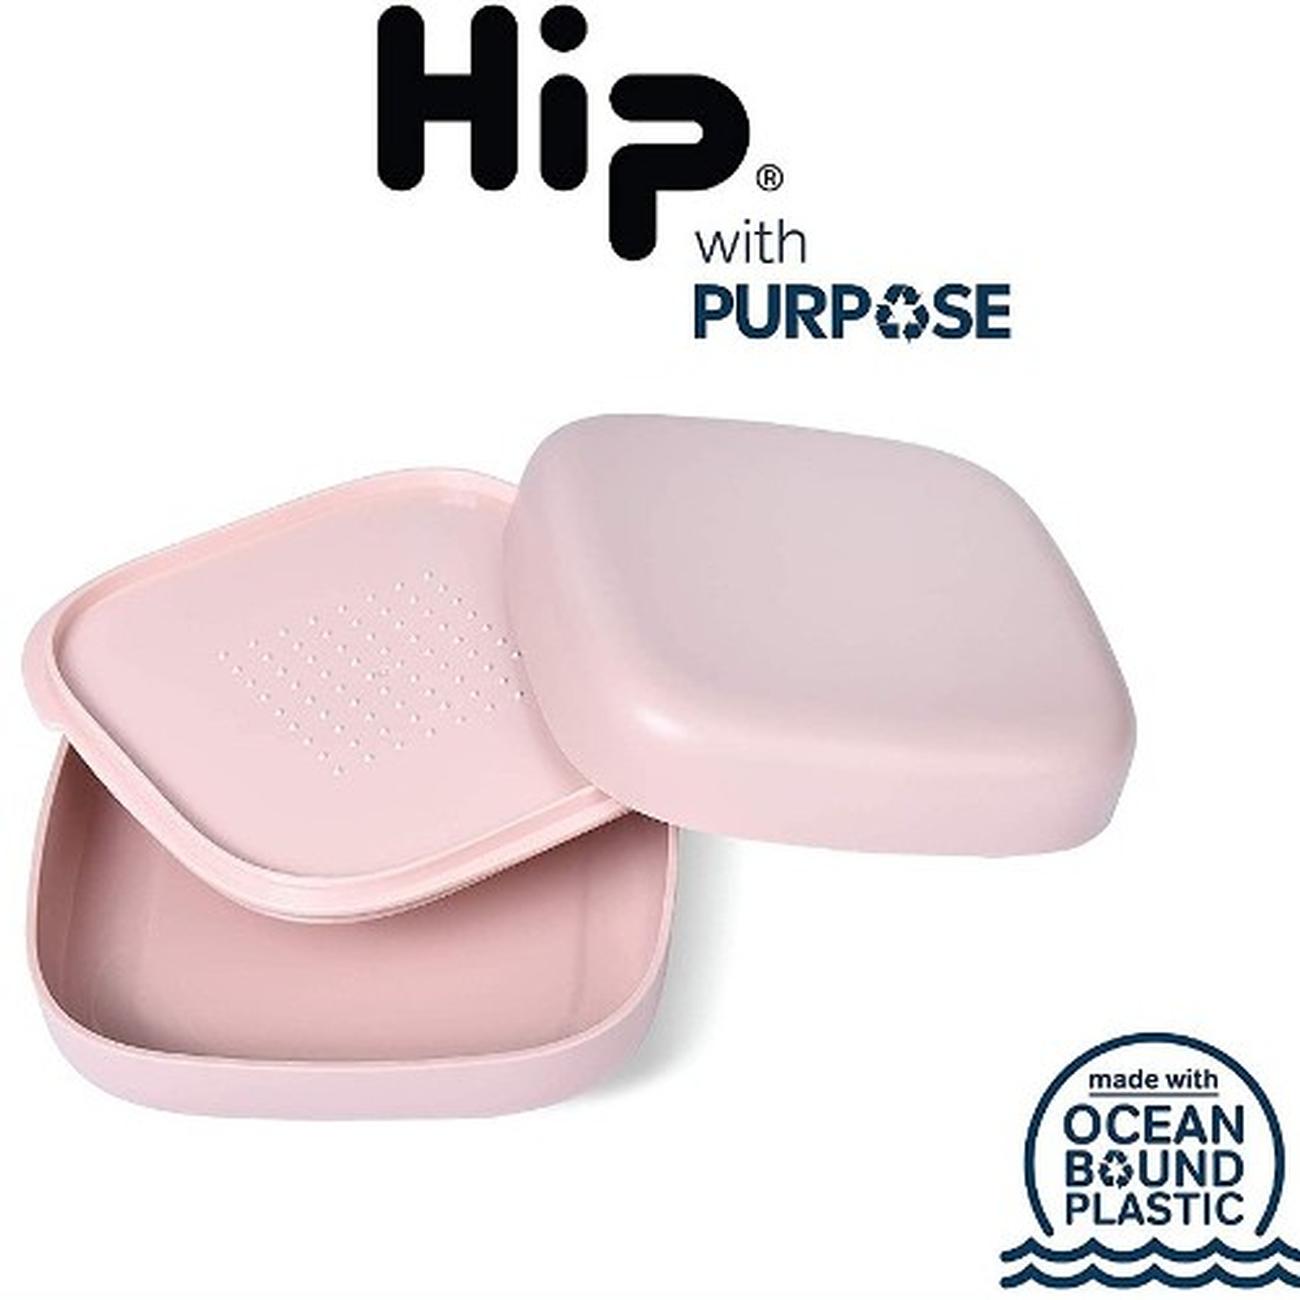 hip-with-purpose-bento-box-dusty-pink - Hip Bento Box Dusty Pink